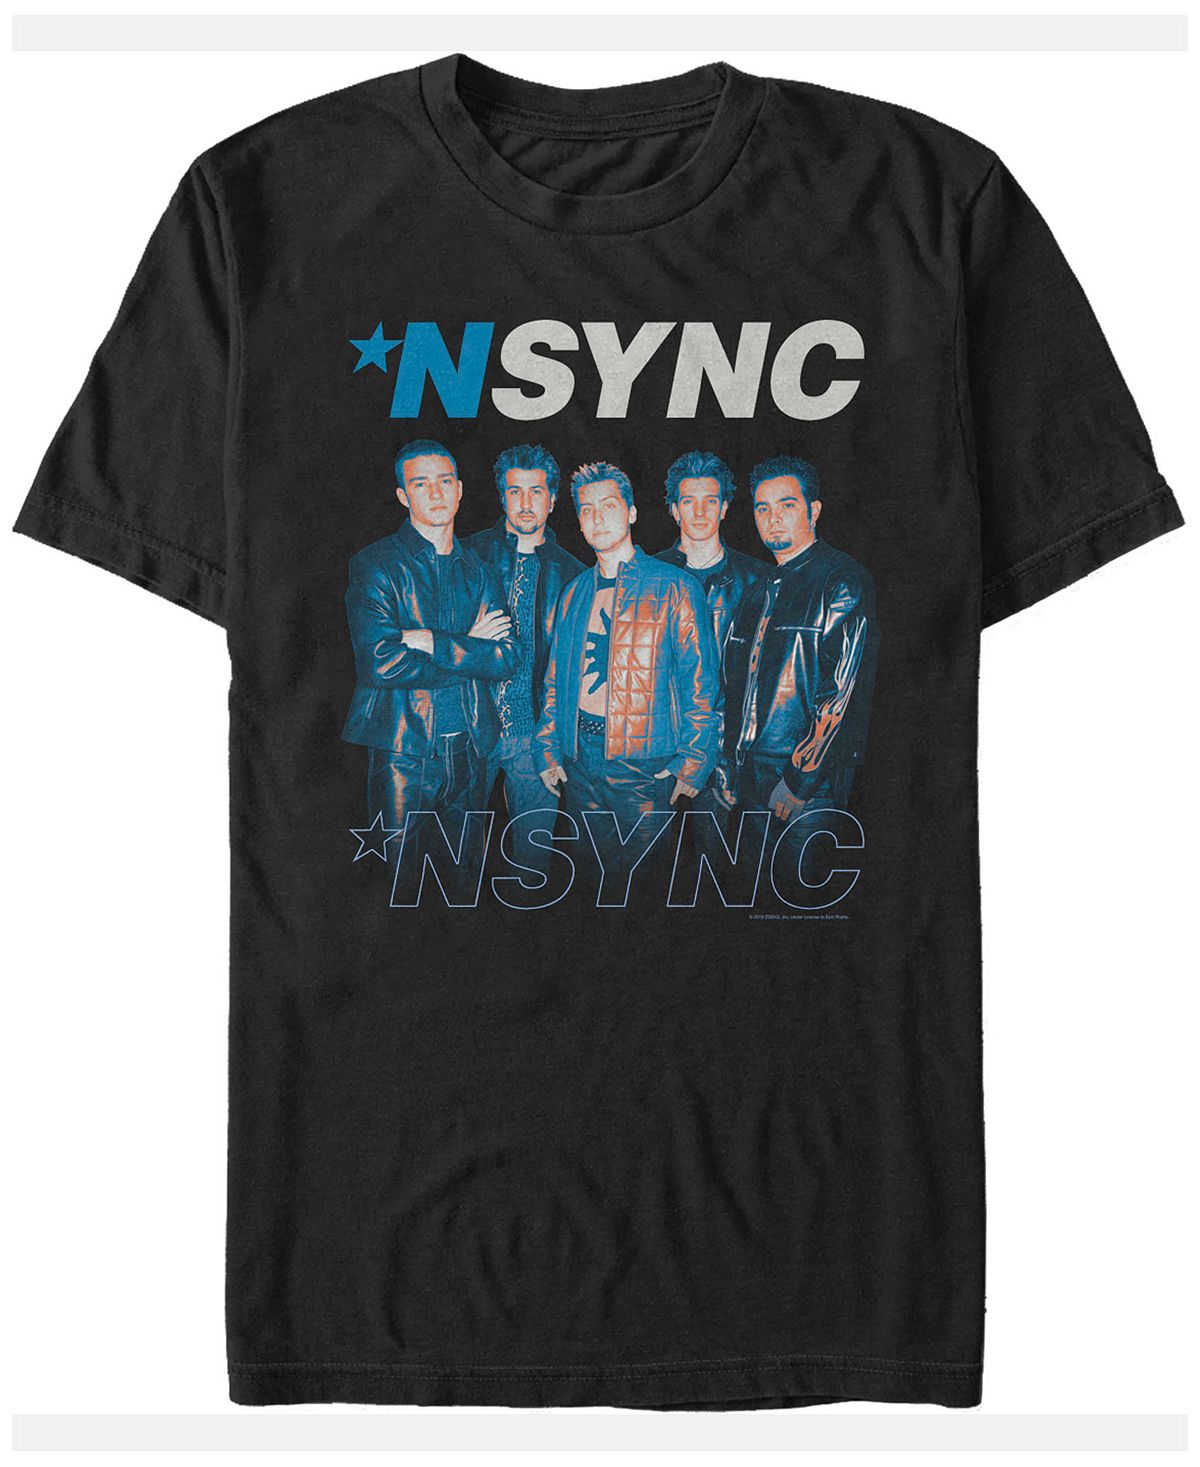 Мужская футболка N'Sync с короткими рукавами и плакатом в стиле поп-звезды Fifth Sun